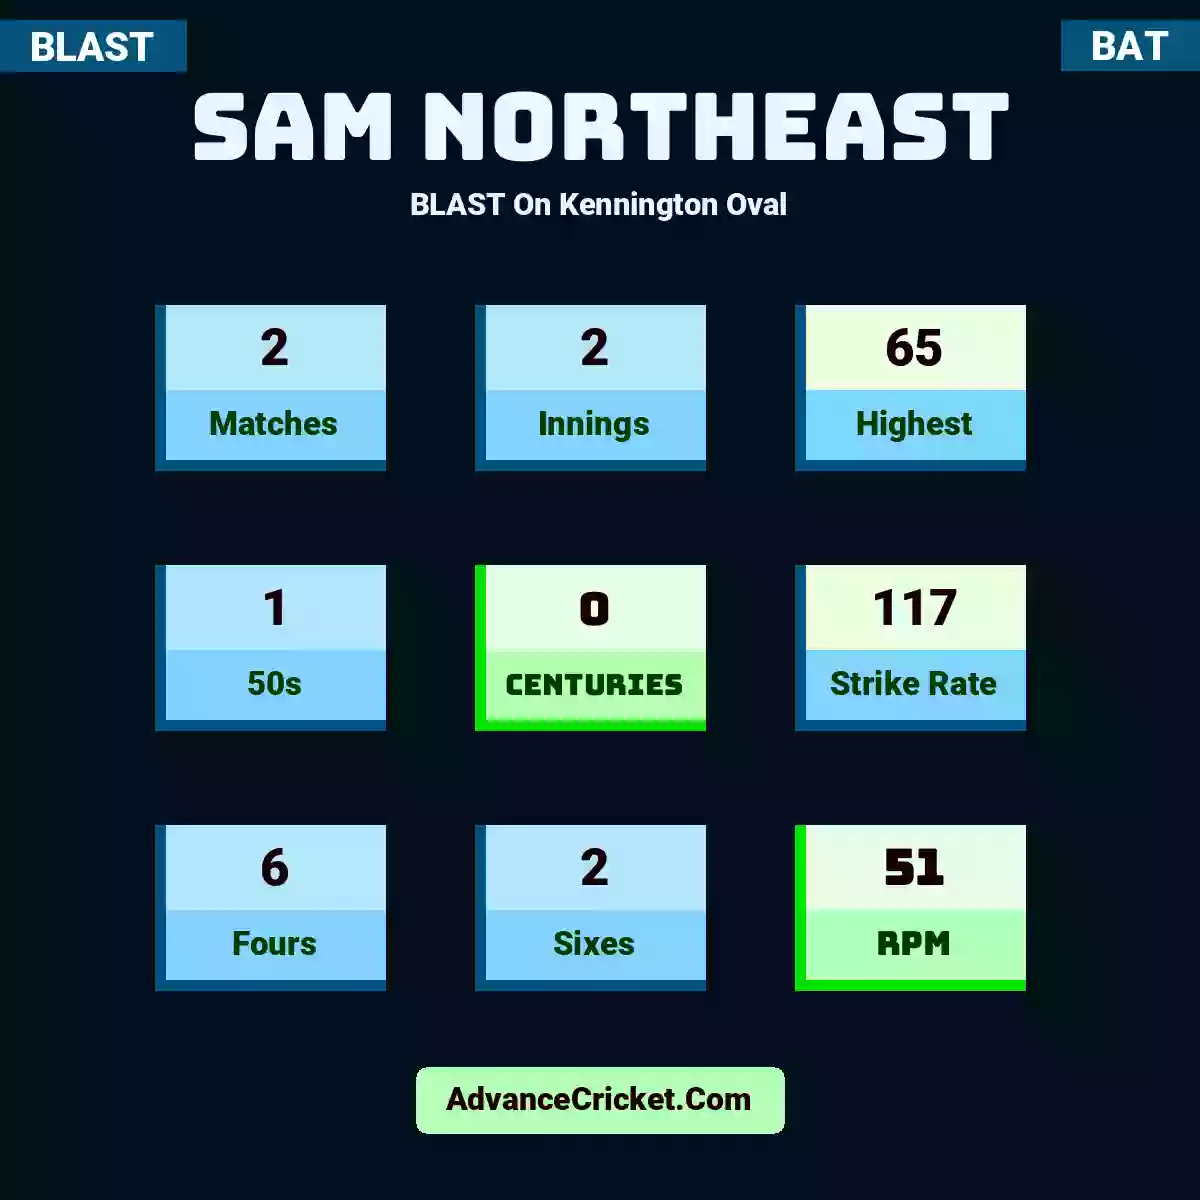 Sam Northeast BLAST  On Kennington Oval, Sam Northeast played 2 matches, scored 65 runs as highest, 1 half-centuries, and 0 centuries, with a strike rate of 117. S.Northeast hit 6 fours and 2 sixes, with an RPM of 51.